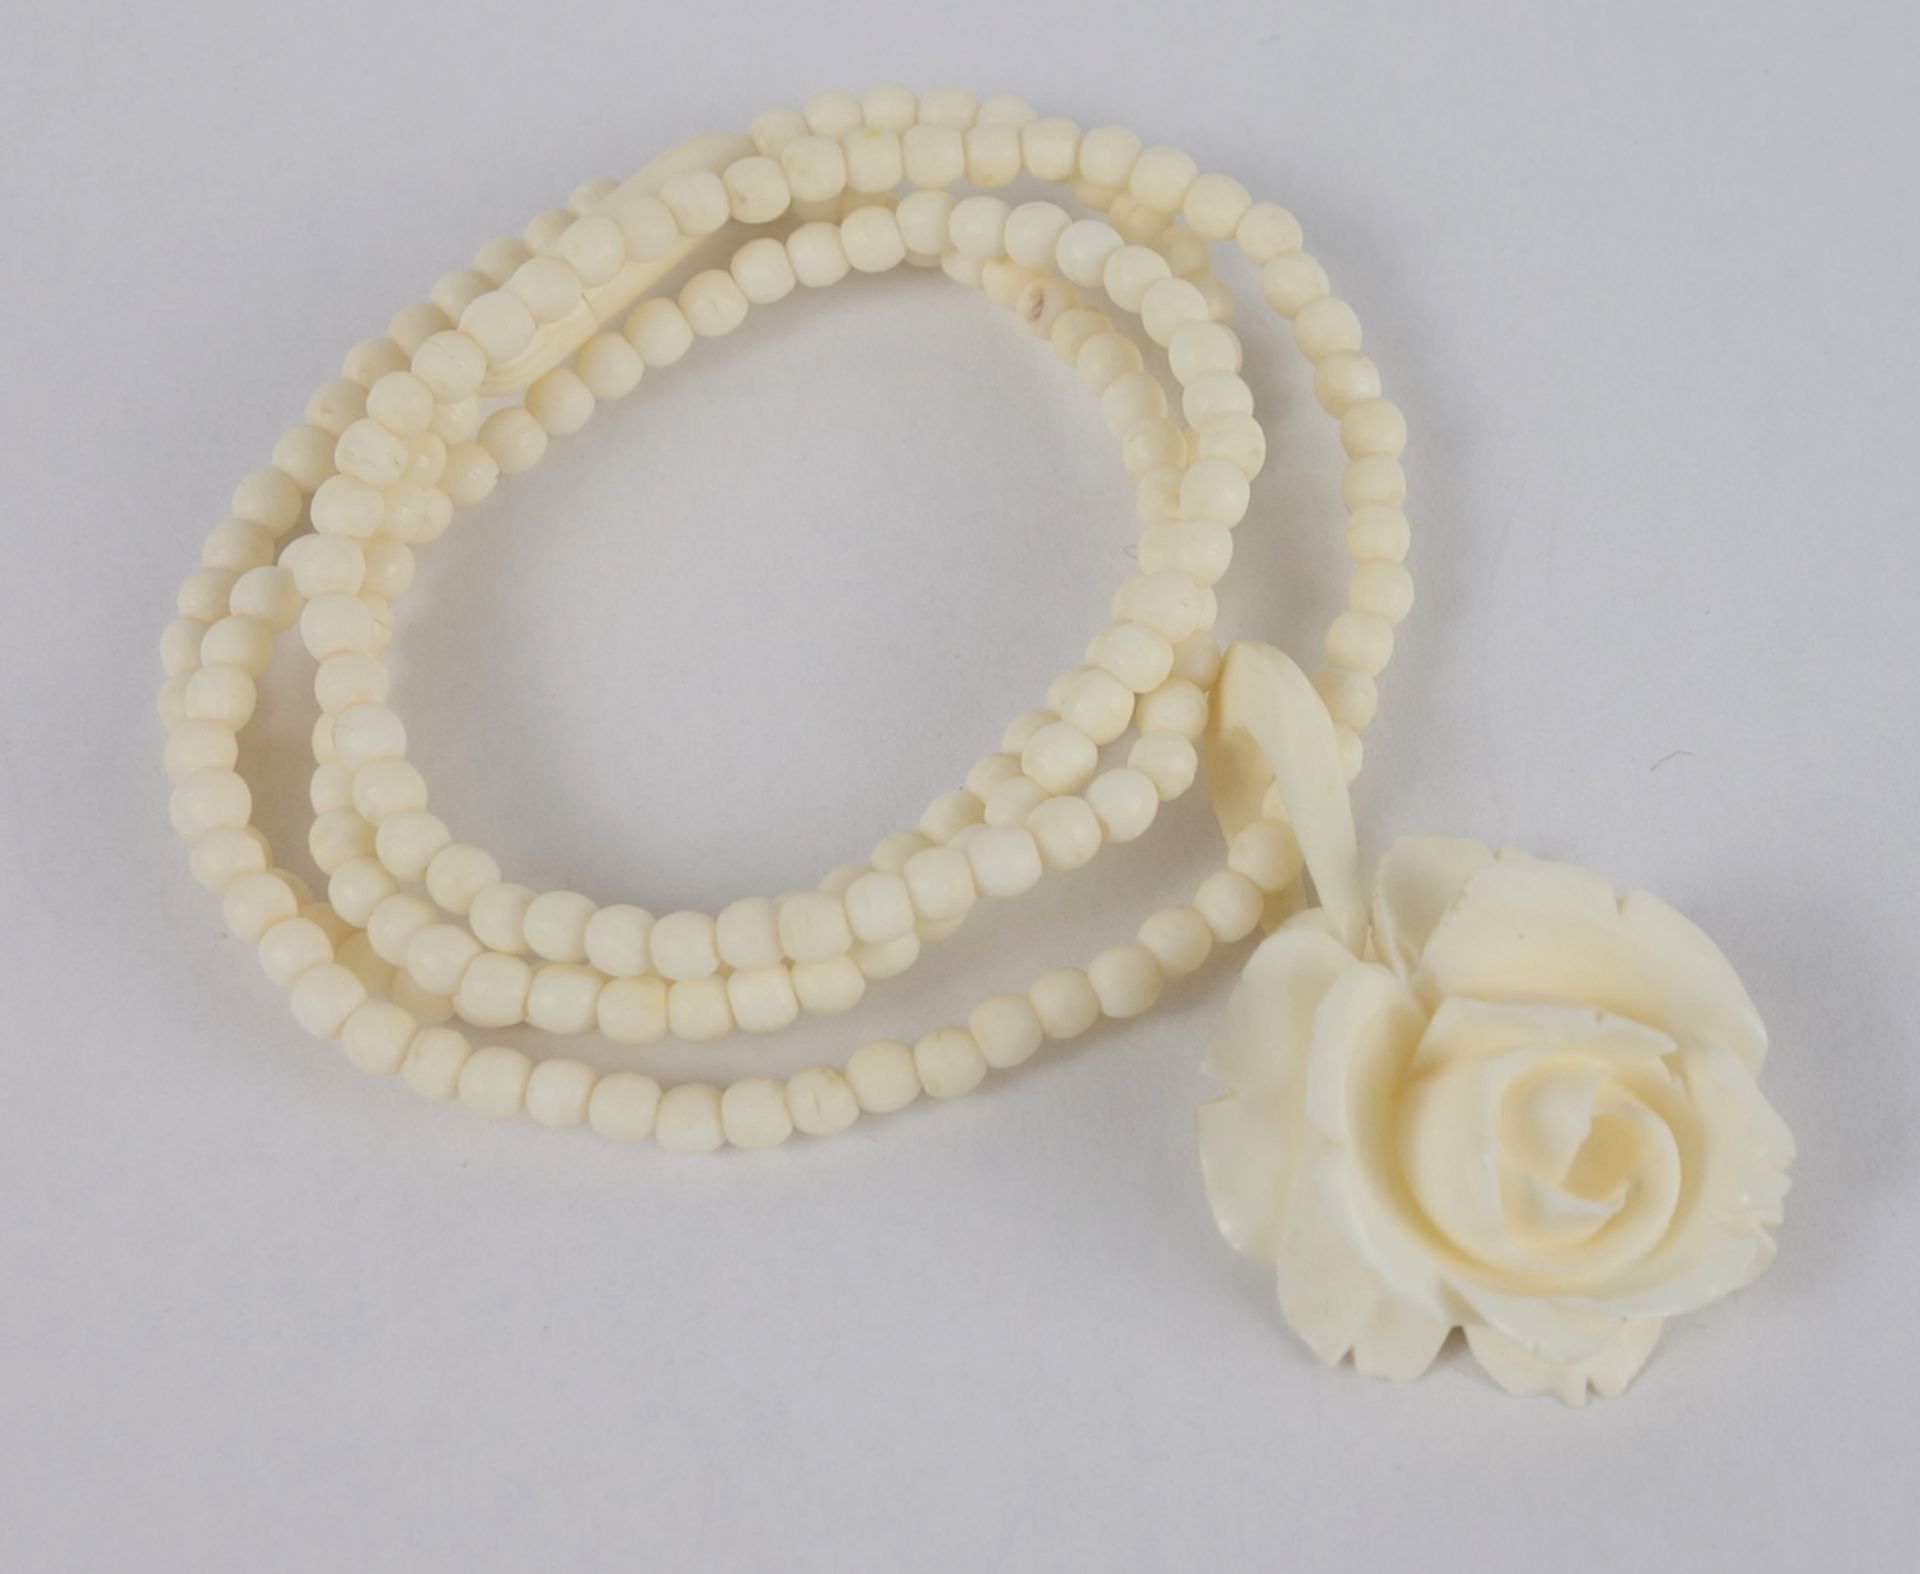 Bone ball chain with rose blossom pendant